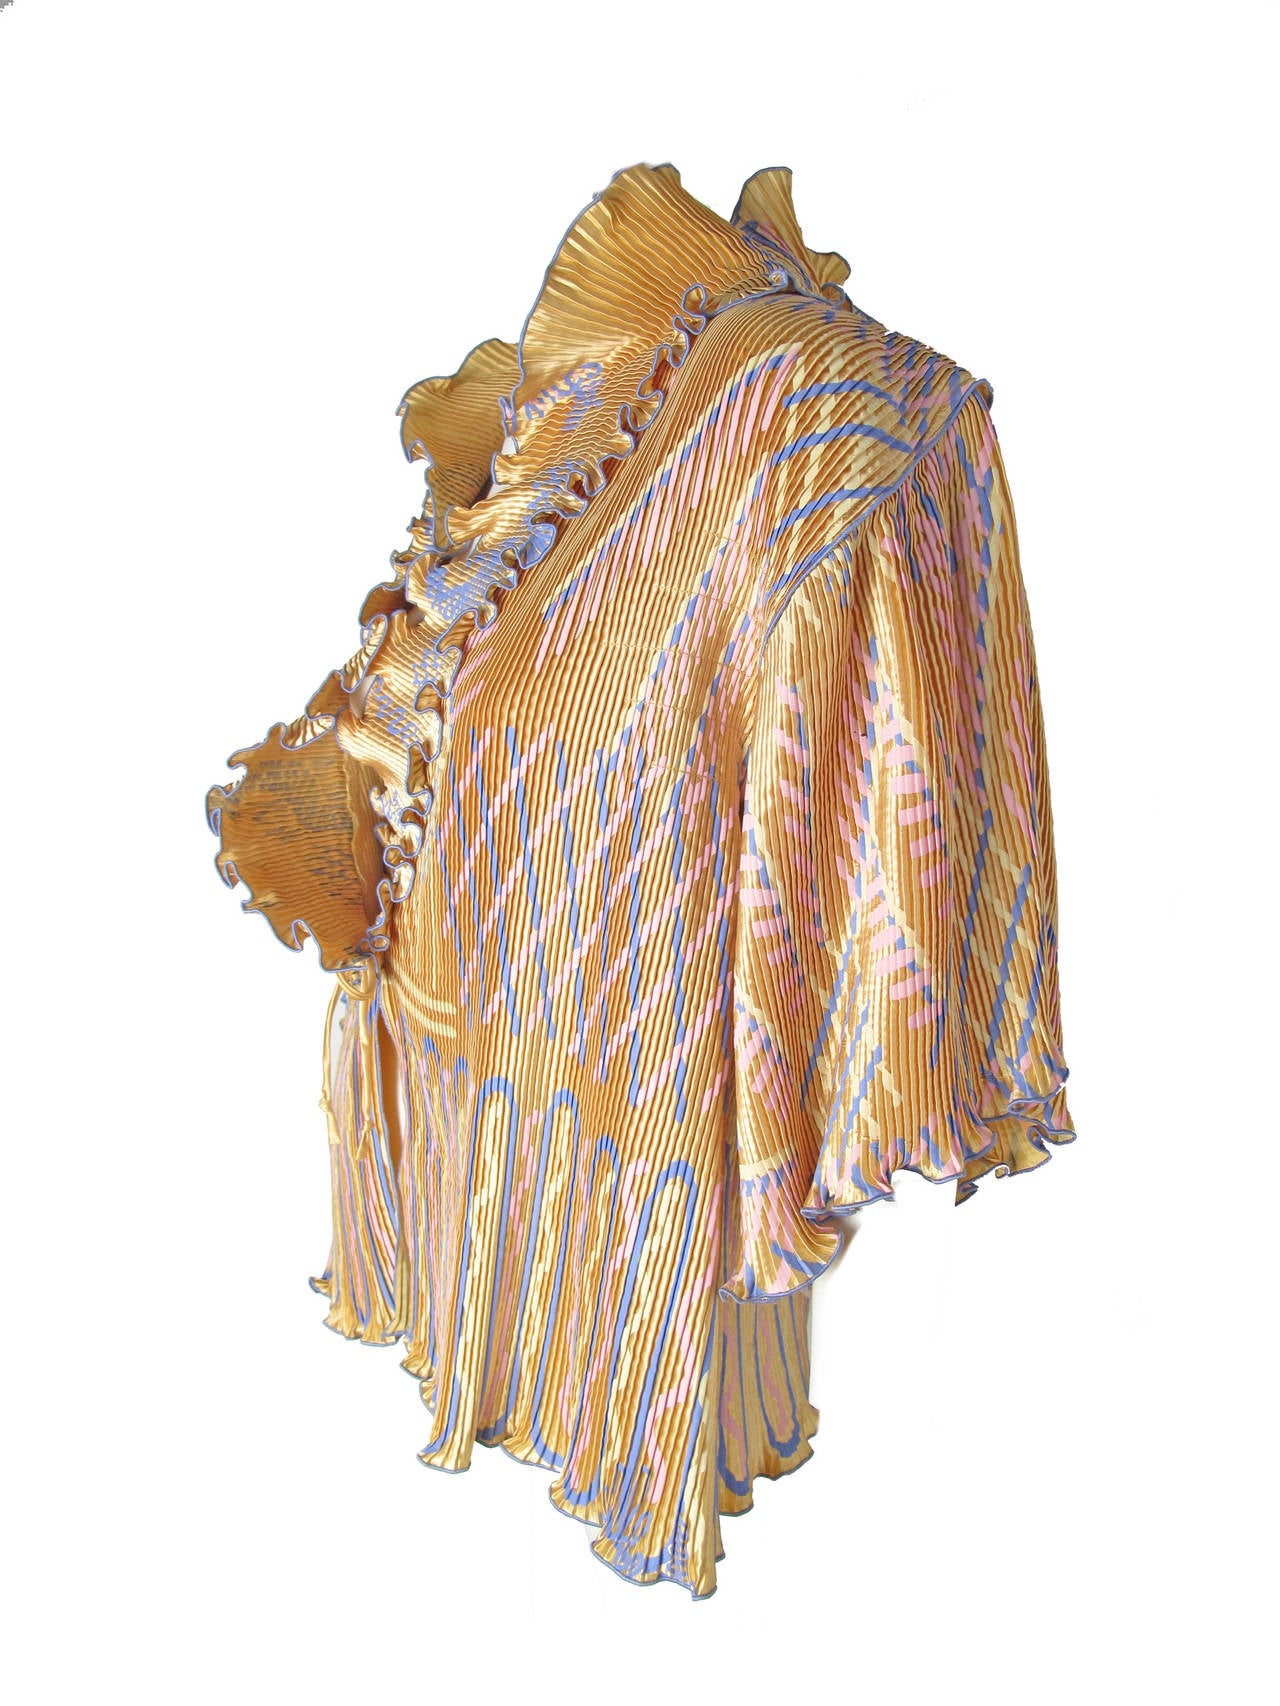 Wonderful 1970s Zandra Rhodes Pleated Silk Screened Jacket. Ties at waist.
24